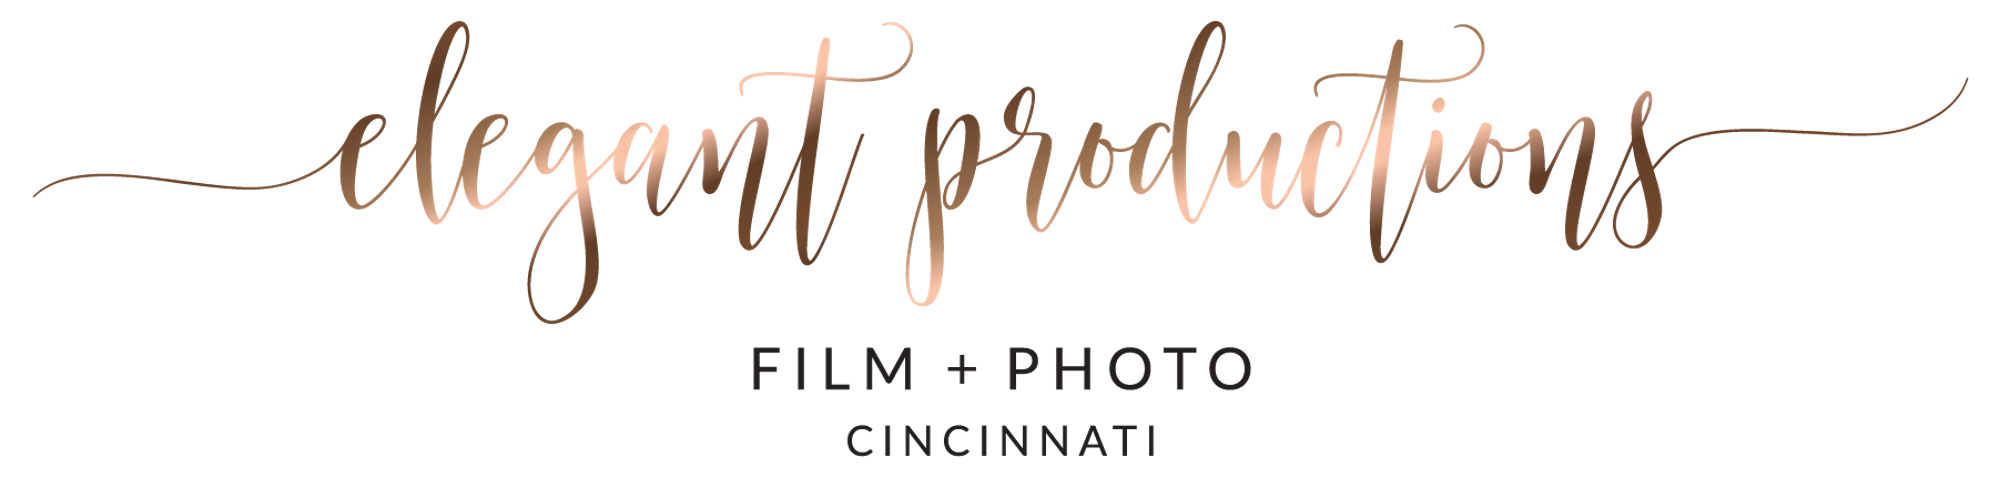 Elegant Productions Cincinnati Wedding Videographer and Photographer